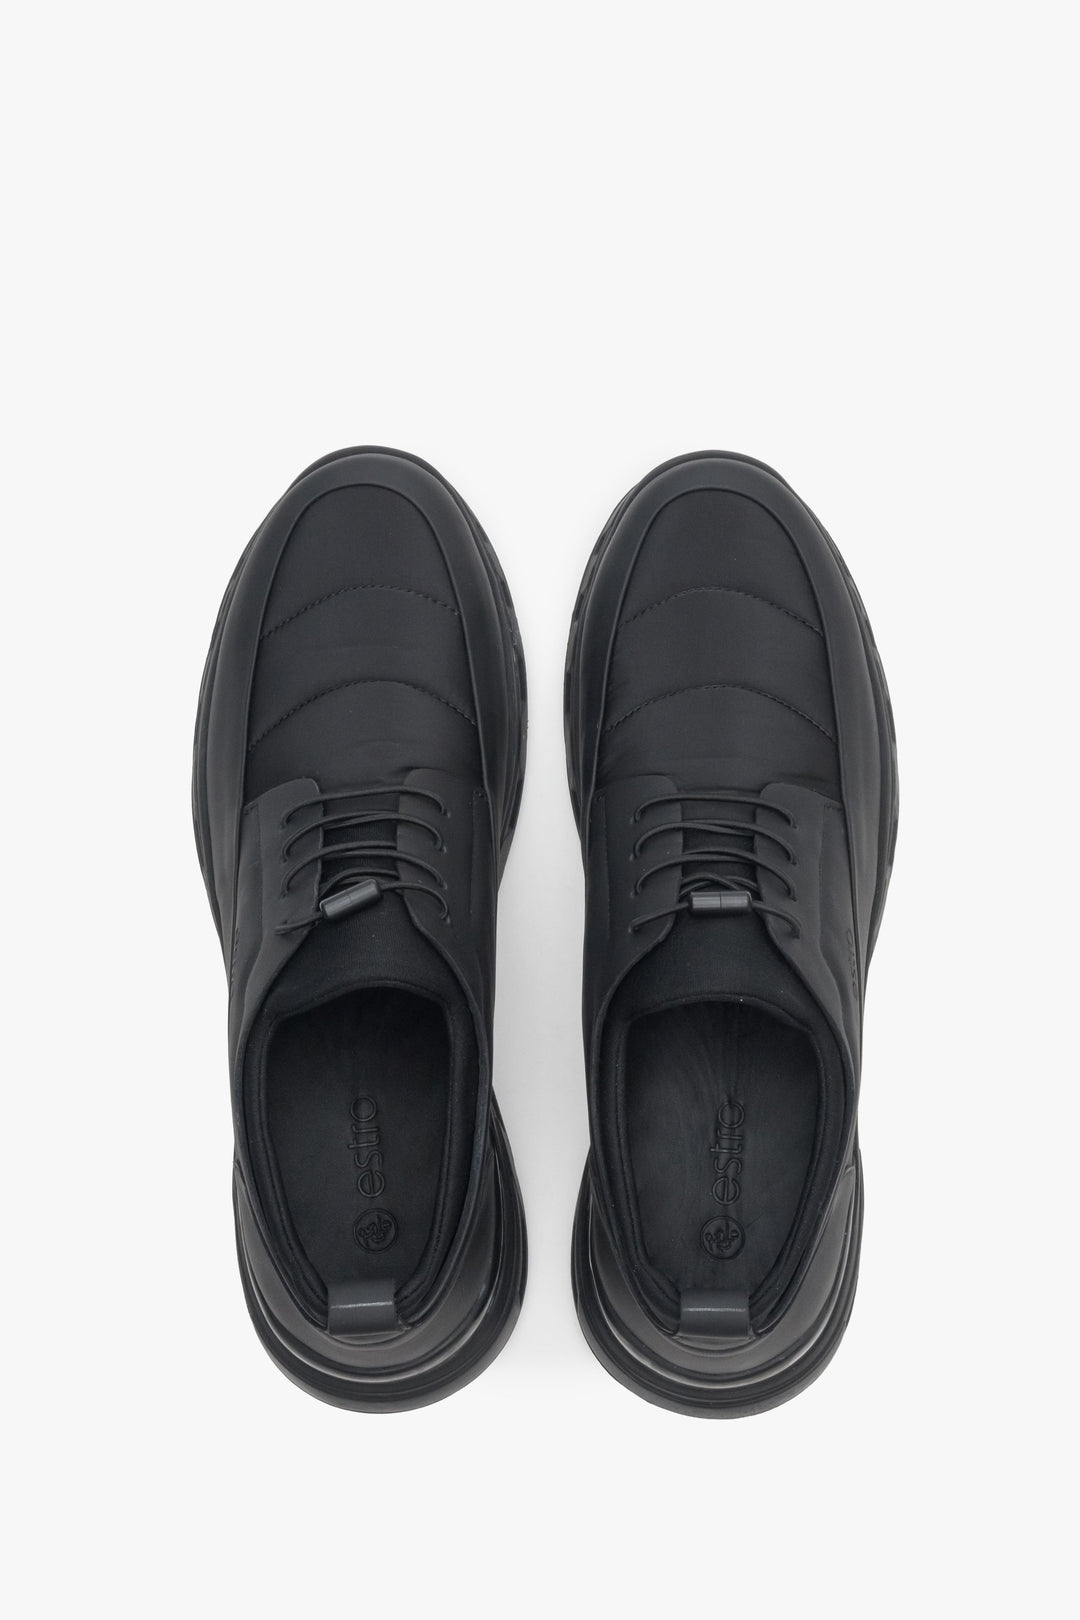 Comfortable, flexible men's  black sneakers by Estro - top view presentation of the model.